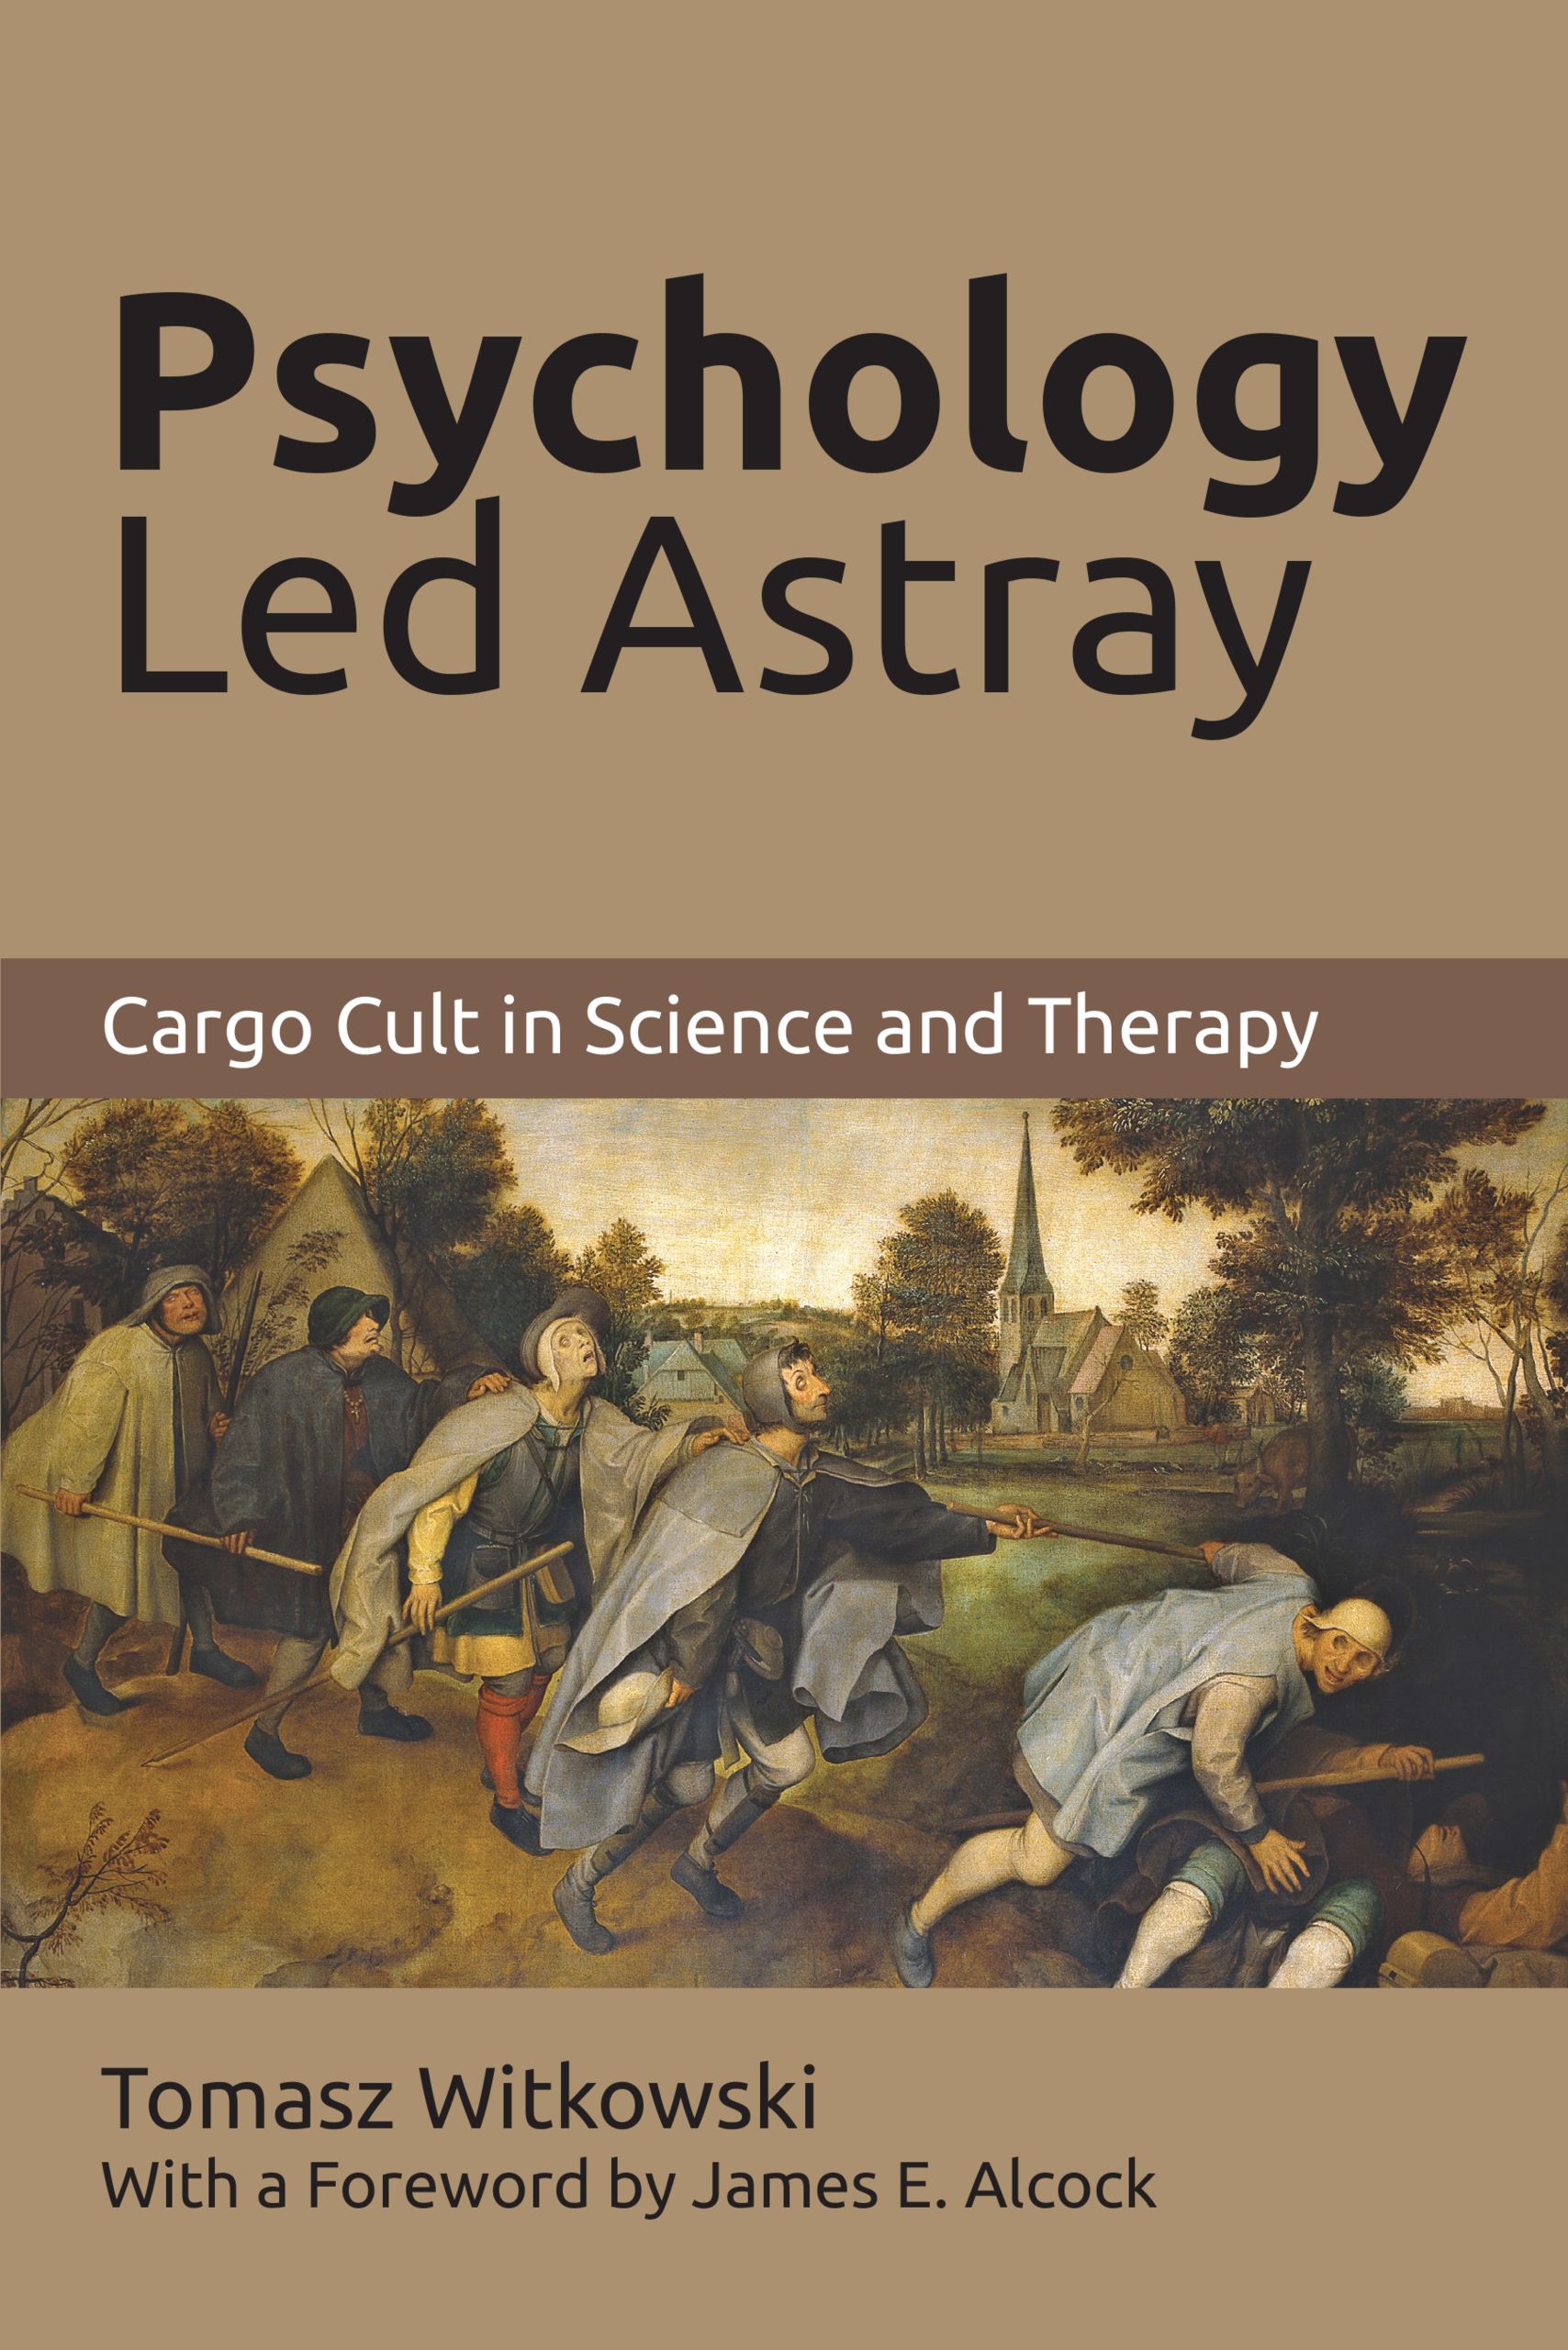 Psychology Led Astray - Buy NOW!